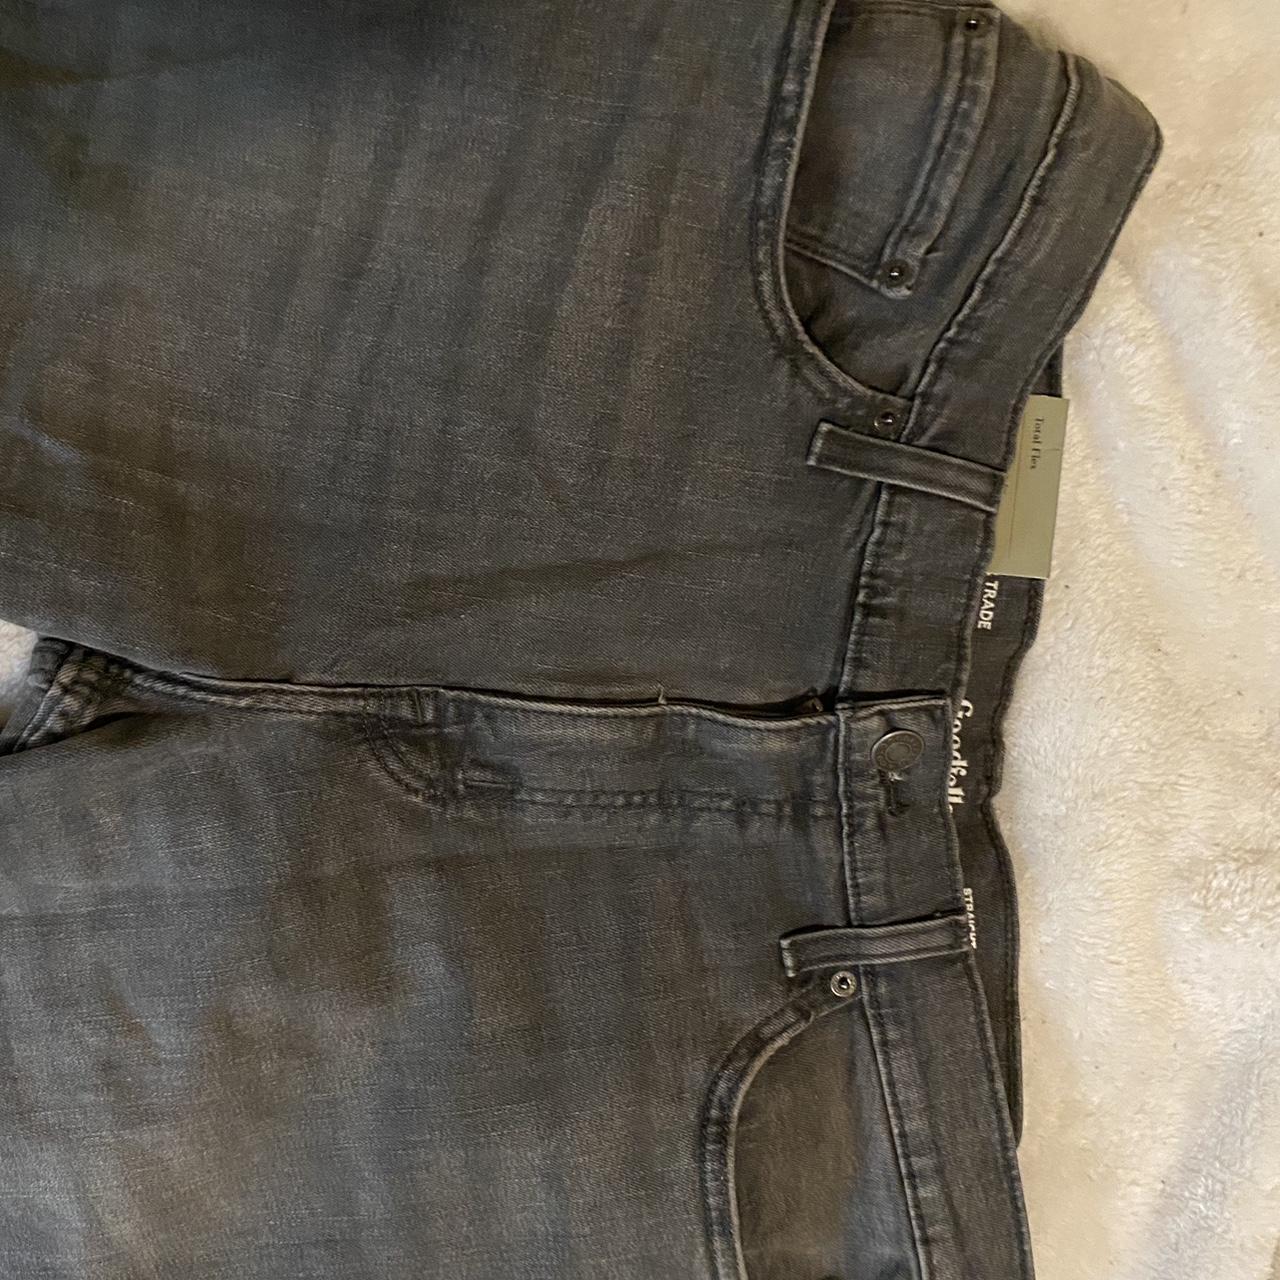 Brand New Men’s Straight Cut Jeans Size 38x32 Dark... - Depop